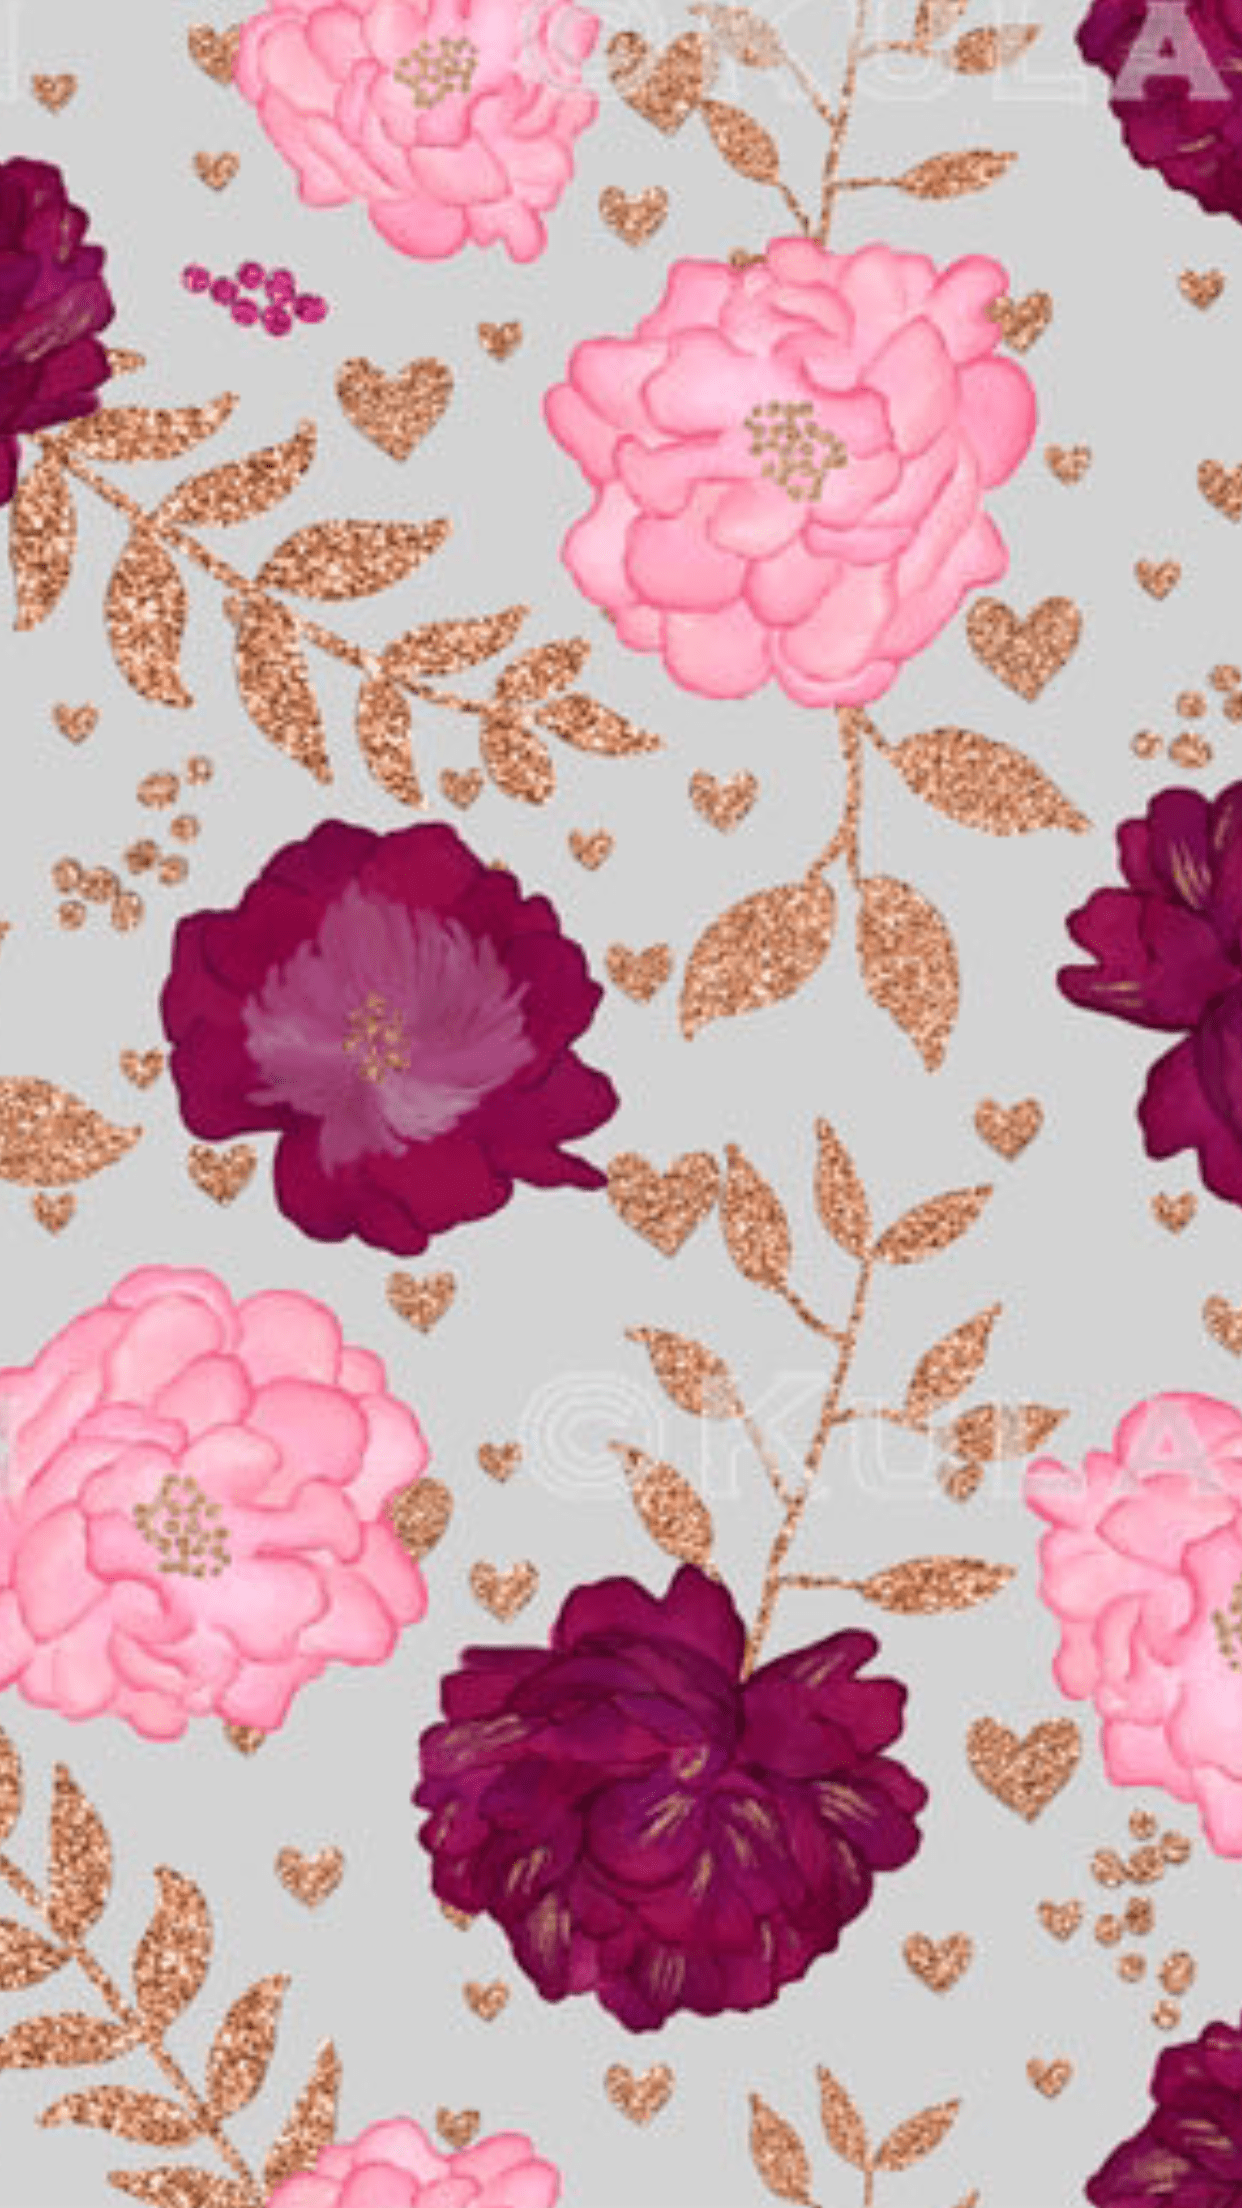 Pinterest Flower Wallpapers - Top Free Pinterest Flower Backgrounds